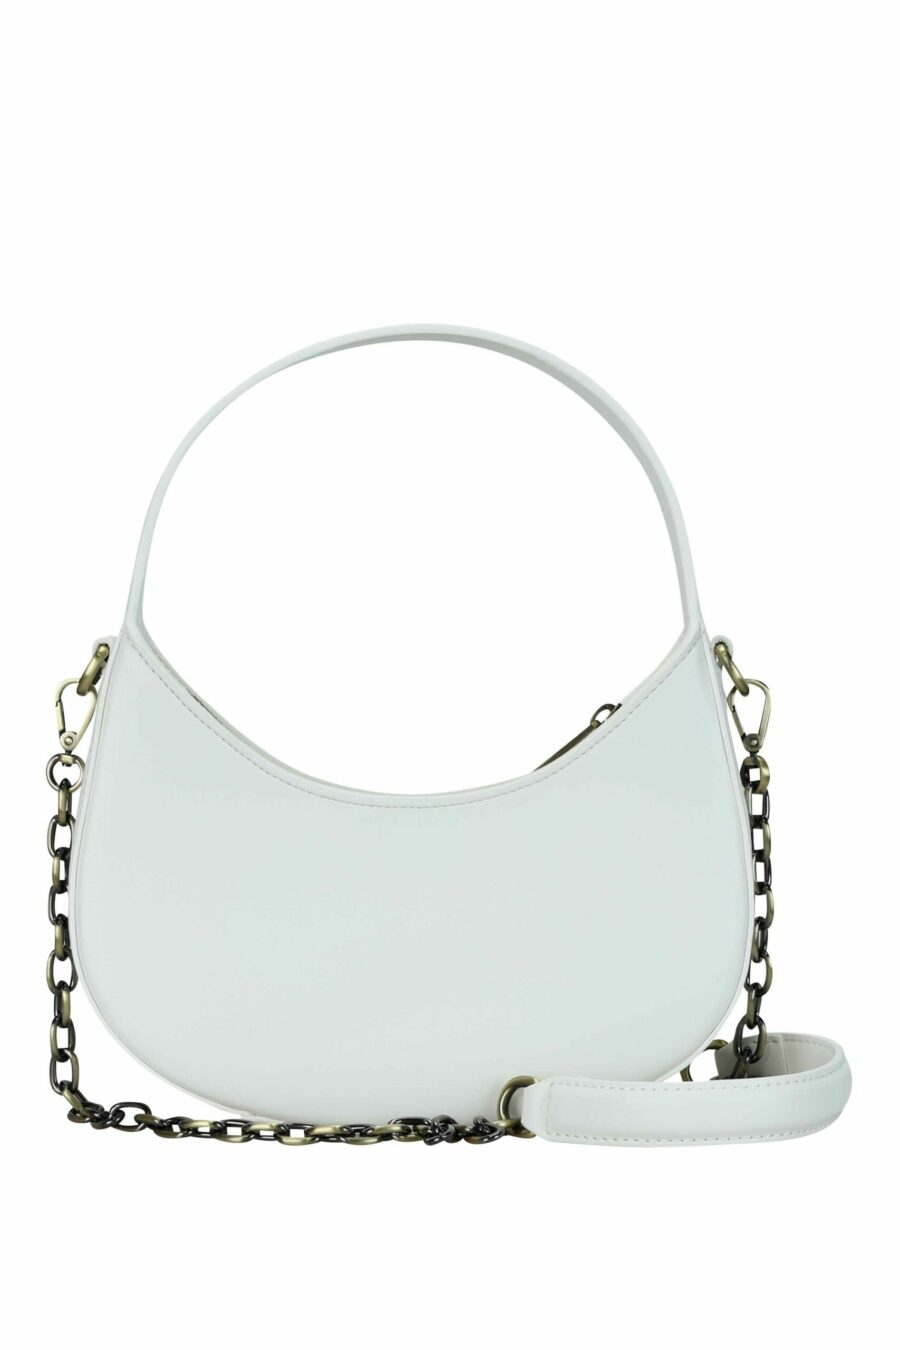 White shoulder bag with golden circular "c" logo - 8052672643797 2 scaled